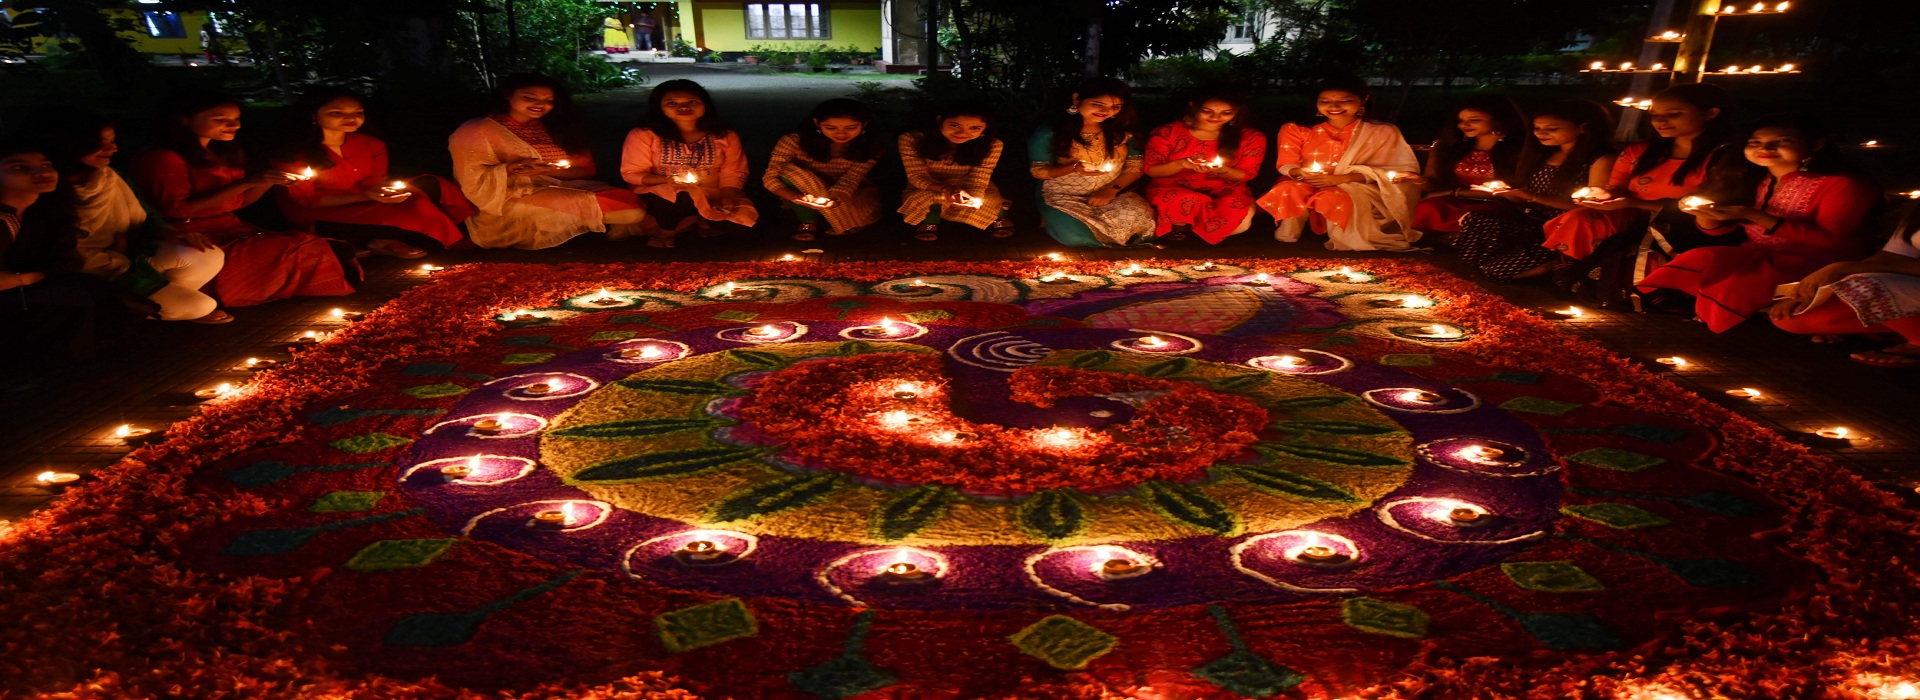 Dhanteras & Diwali Date, muhurt time in UK Pujan vidhi, Mantras, and Aarti